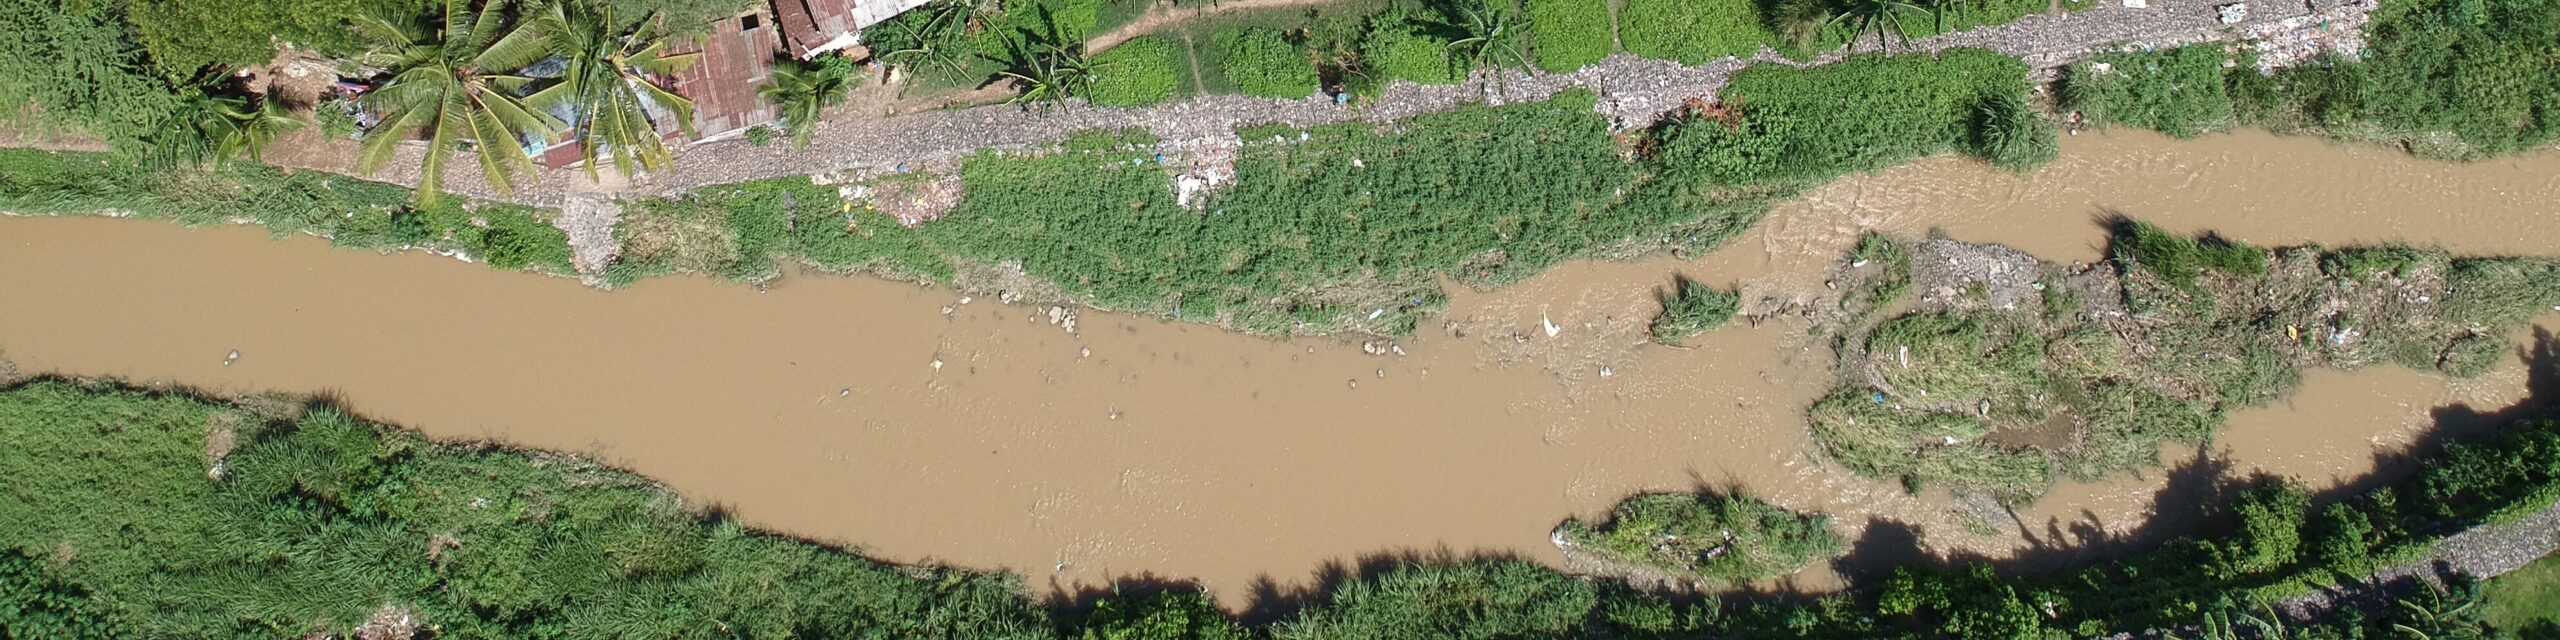 Mananga-Fluss (übergetreten) mit Umland